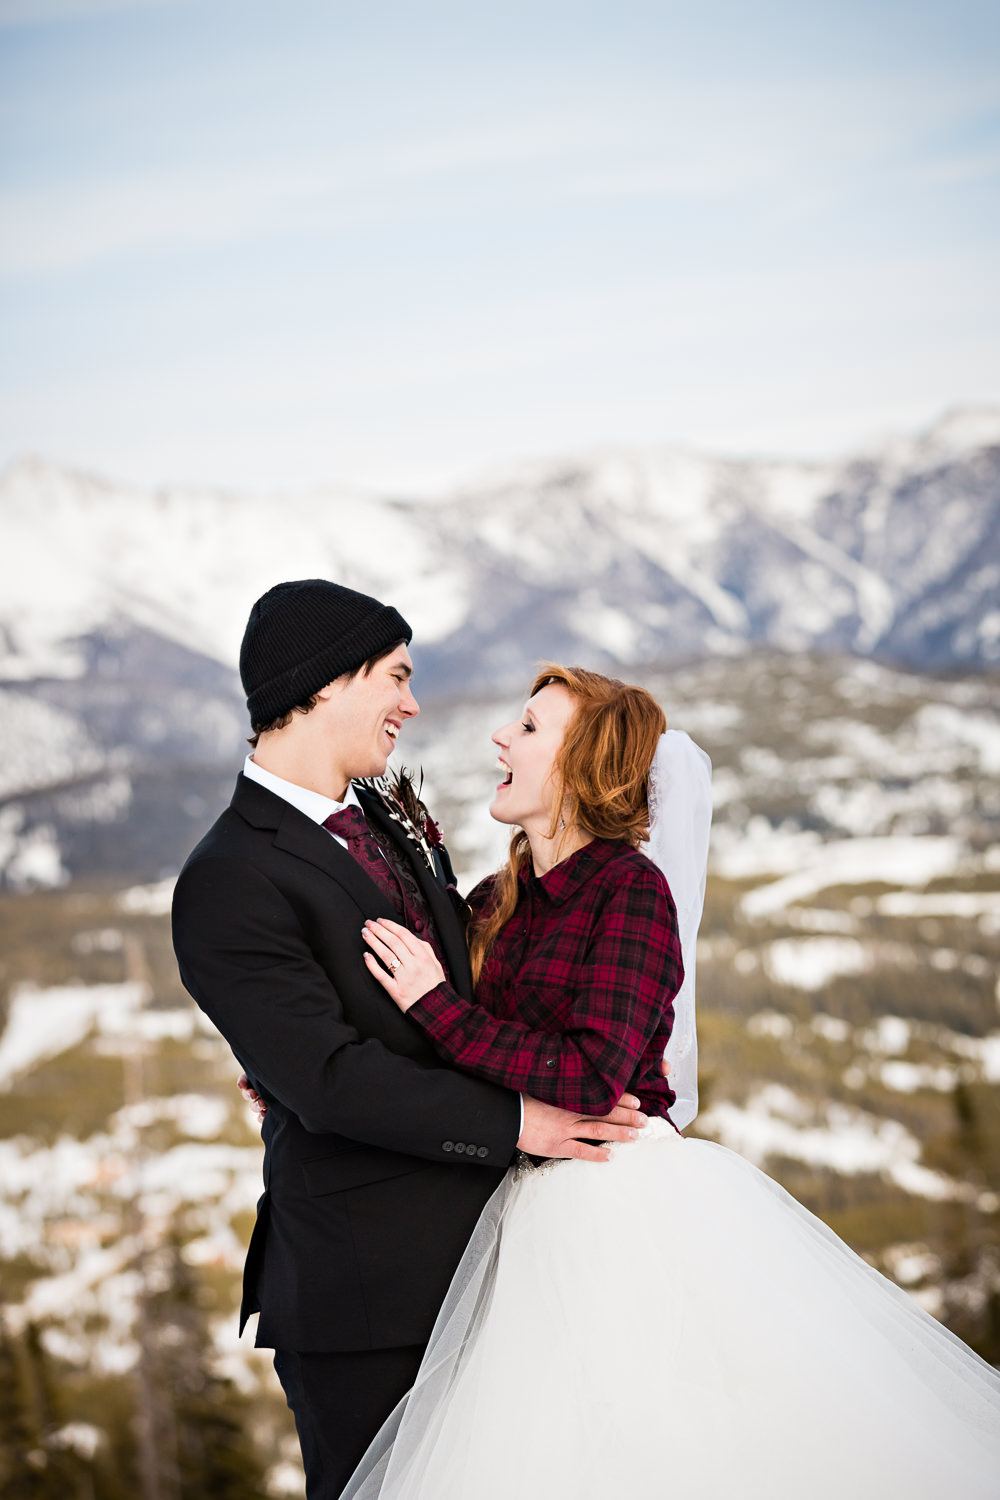 big-sky-montana-winter-wedding-breanna-formals-groom-bride-snowboarding.jpg